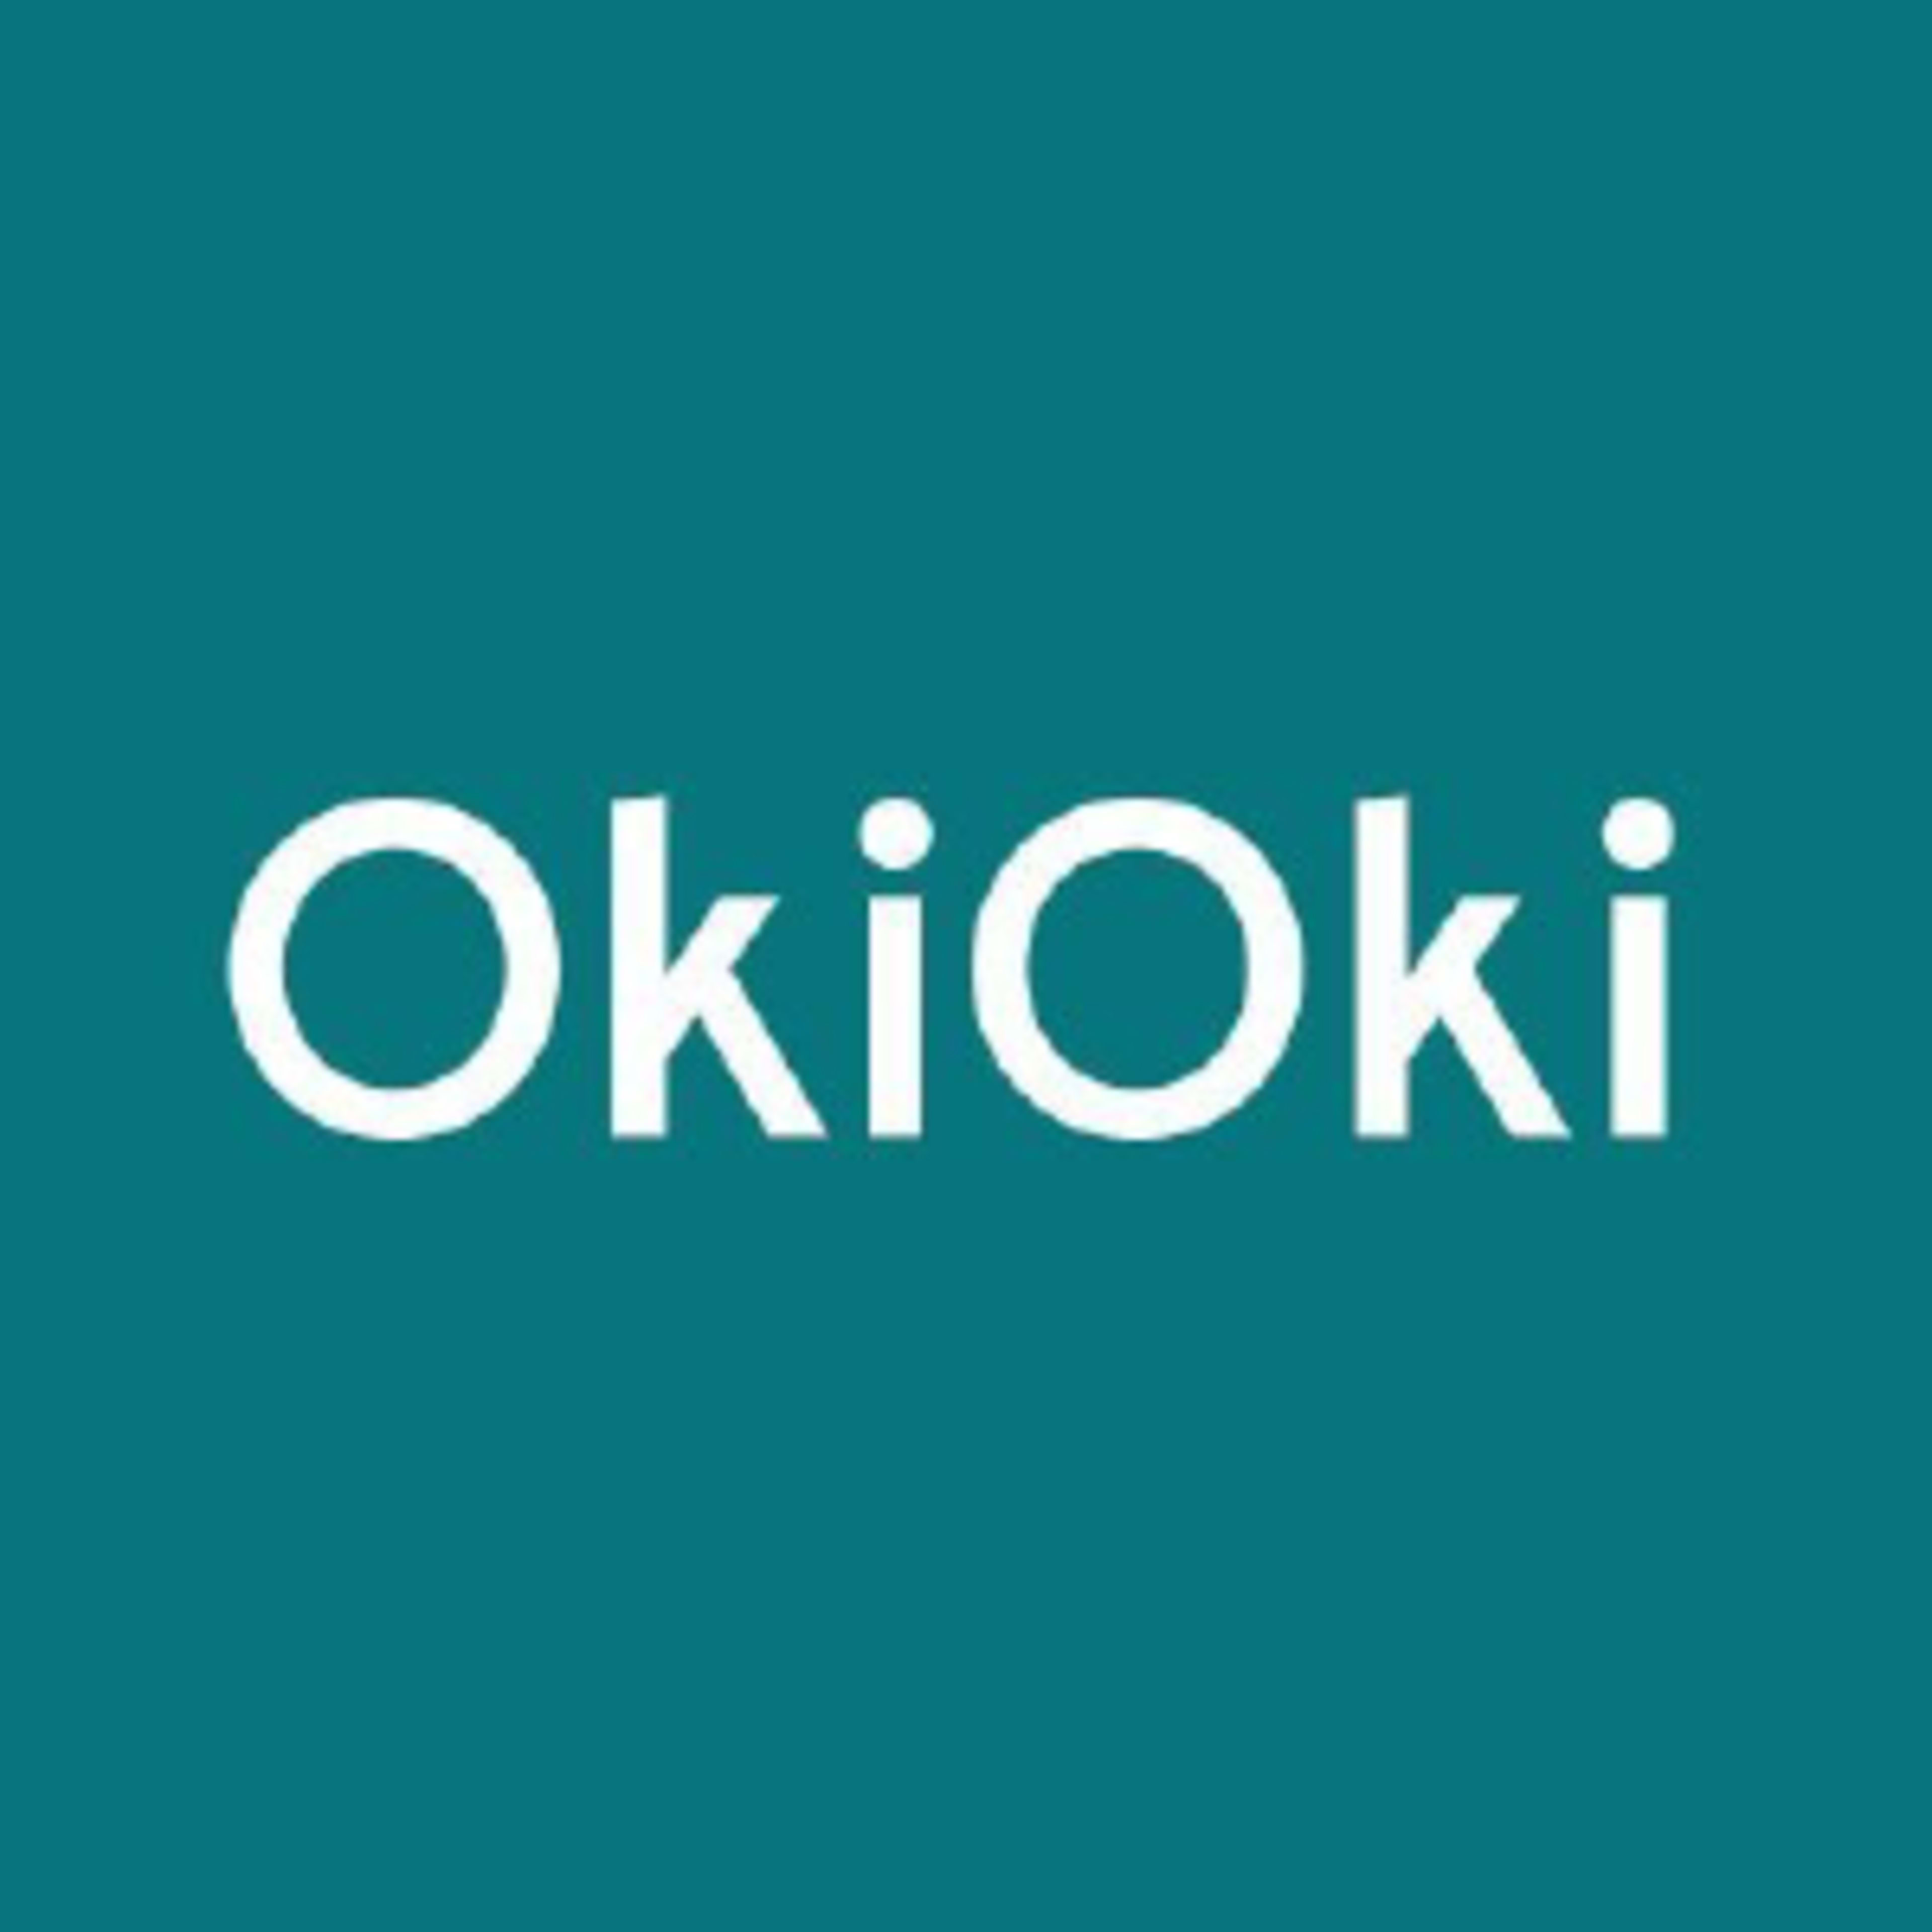 OkiOkiCode